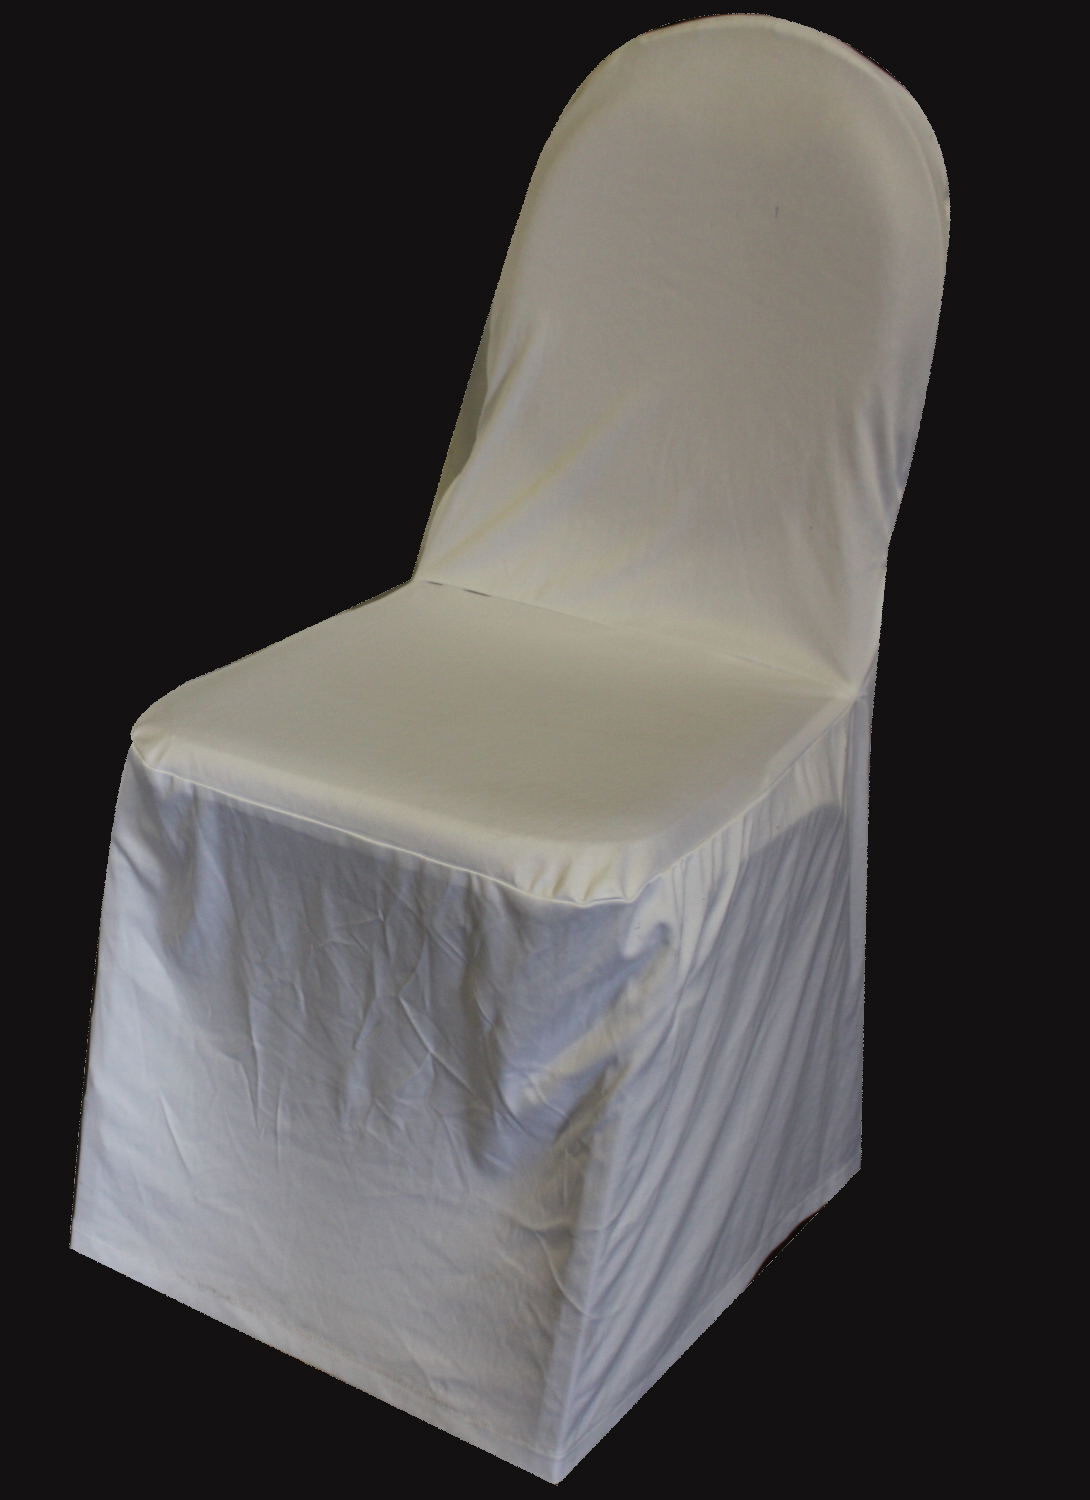 White Chair Cover